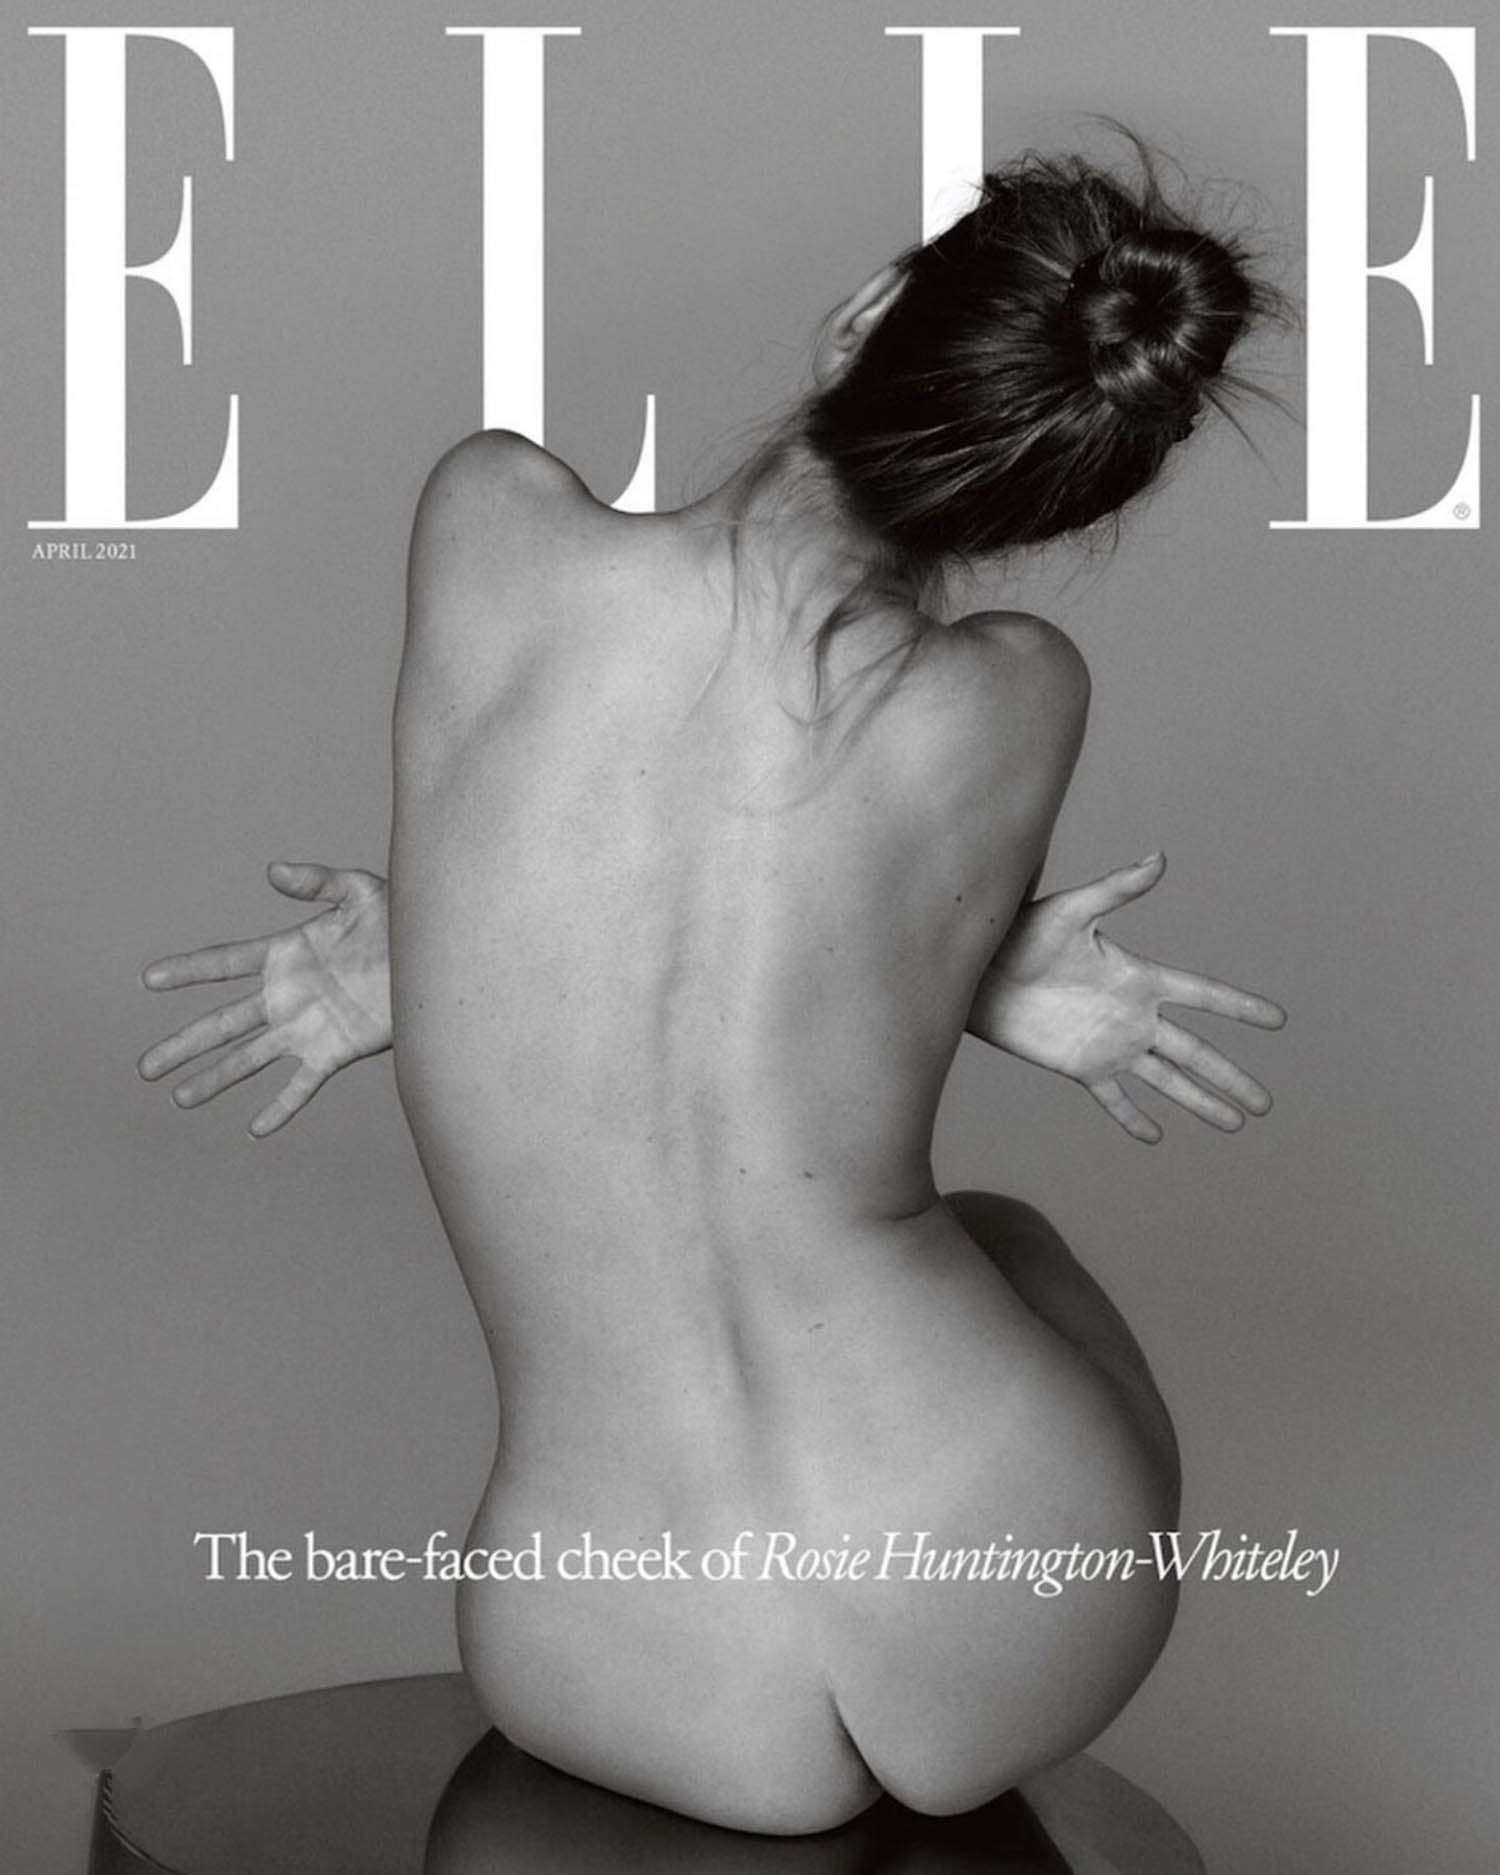 Rosie Huntington-Whiteley covers Elle UK April 2021 by Quentin Jones